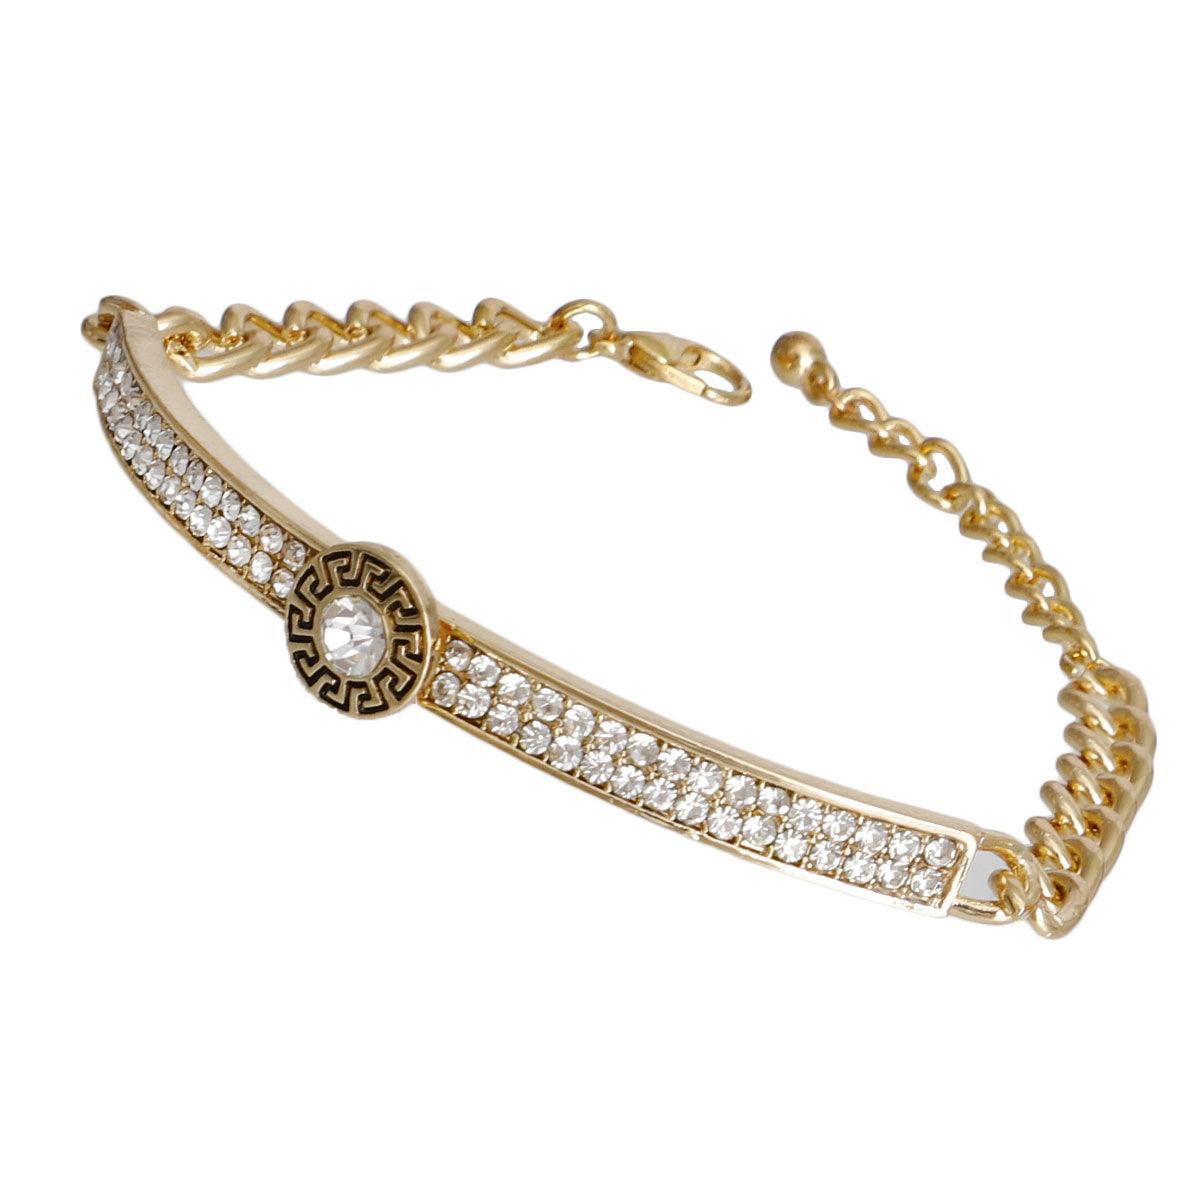 Get Stylish: Gold Half Chain Bangle Bracelet - Designer Inspired